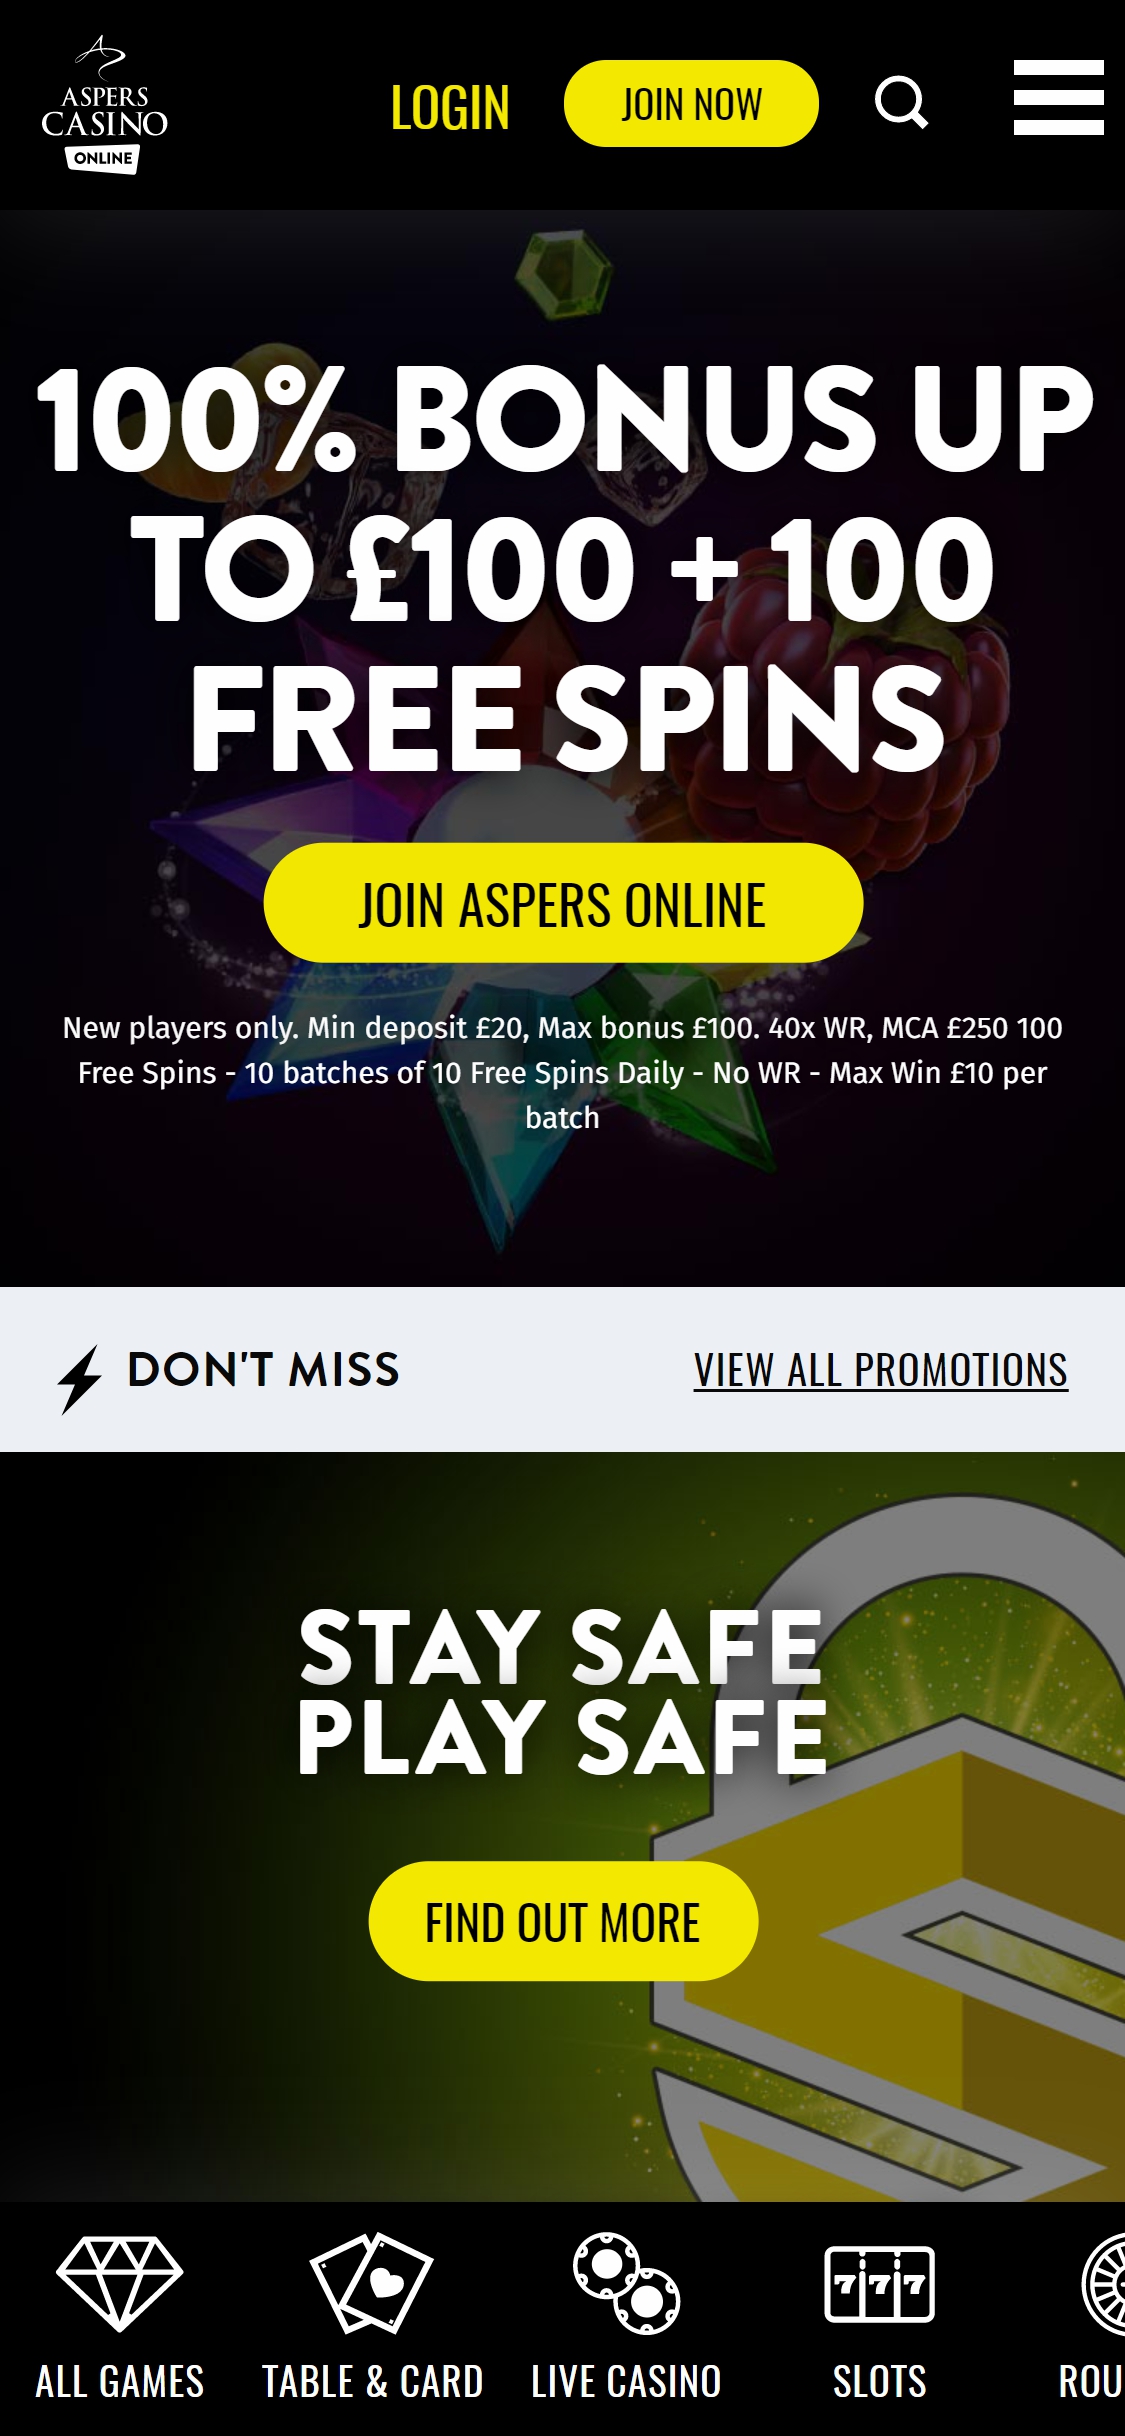 Aspers Casino Mobile Review